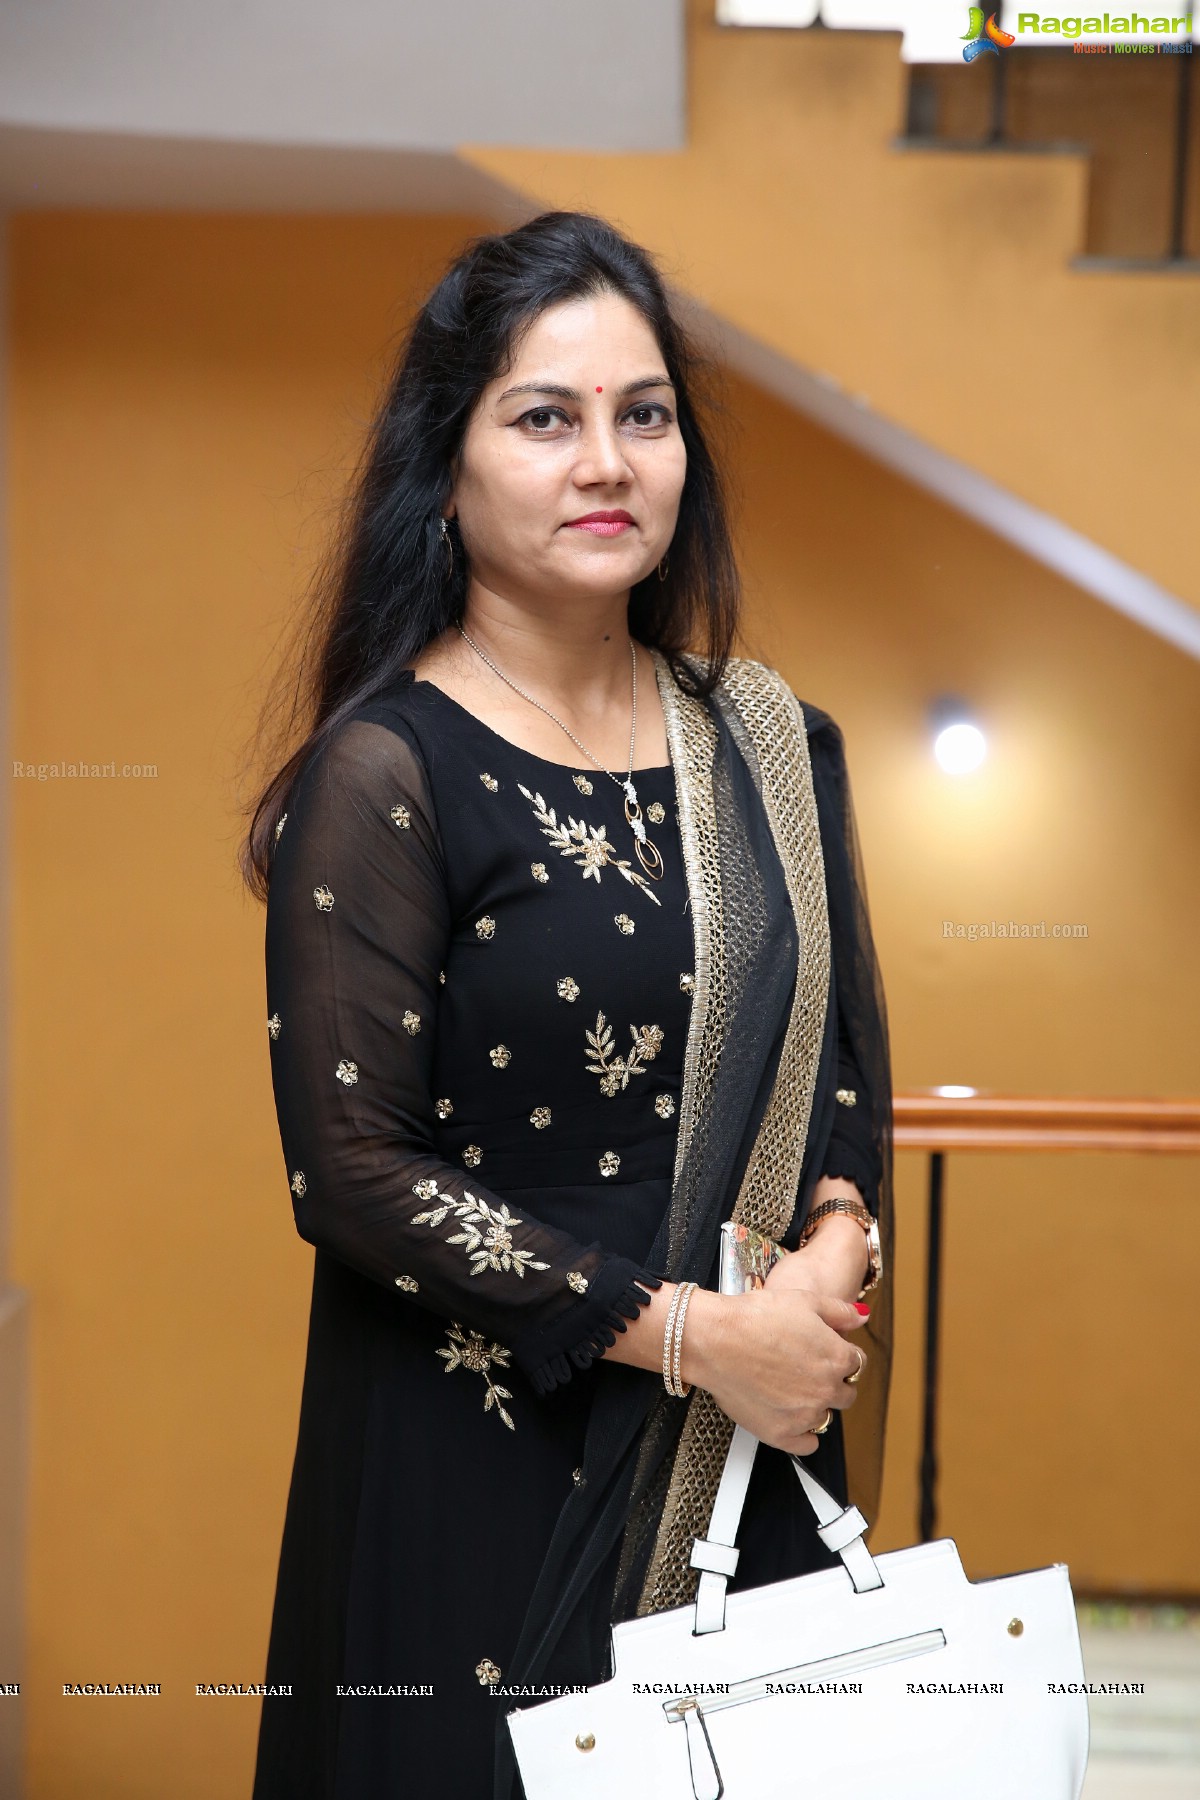 Launch of Mrs India Telangana 2019 at Prasad Labs Preview Theatre, Banjara Hills, Hyderabad